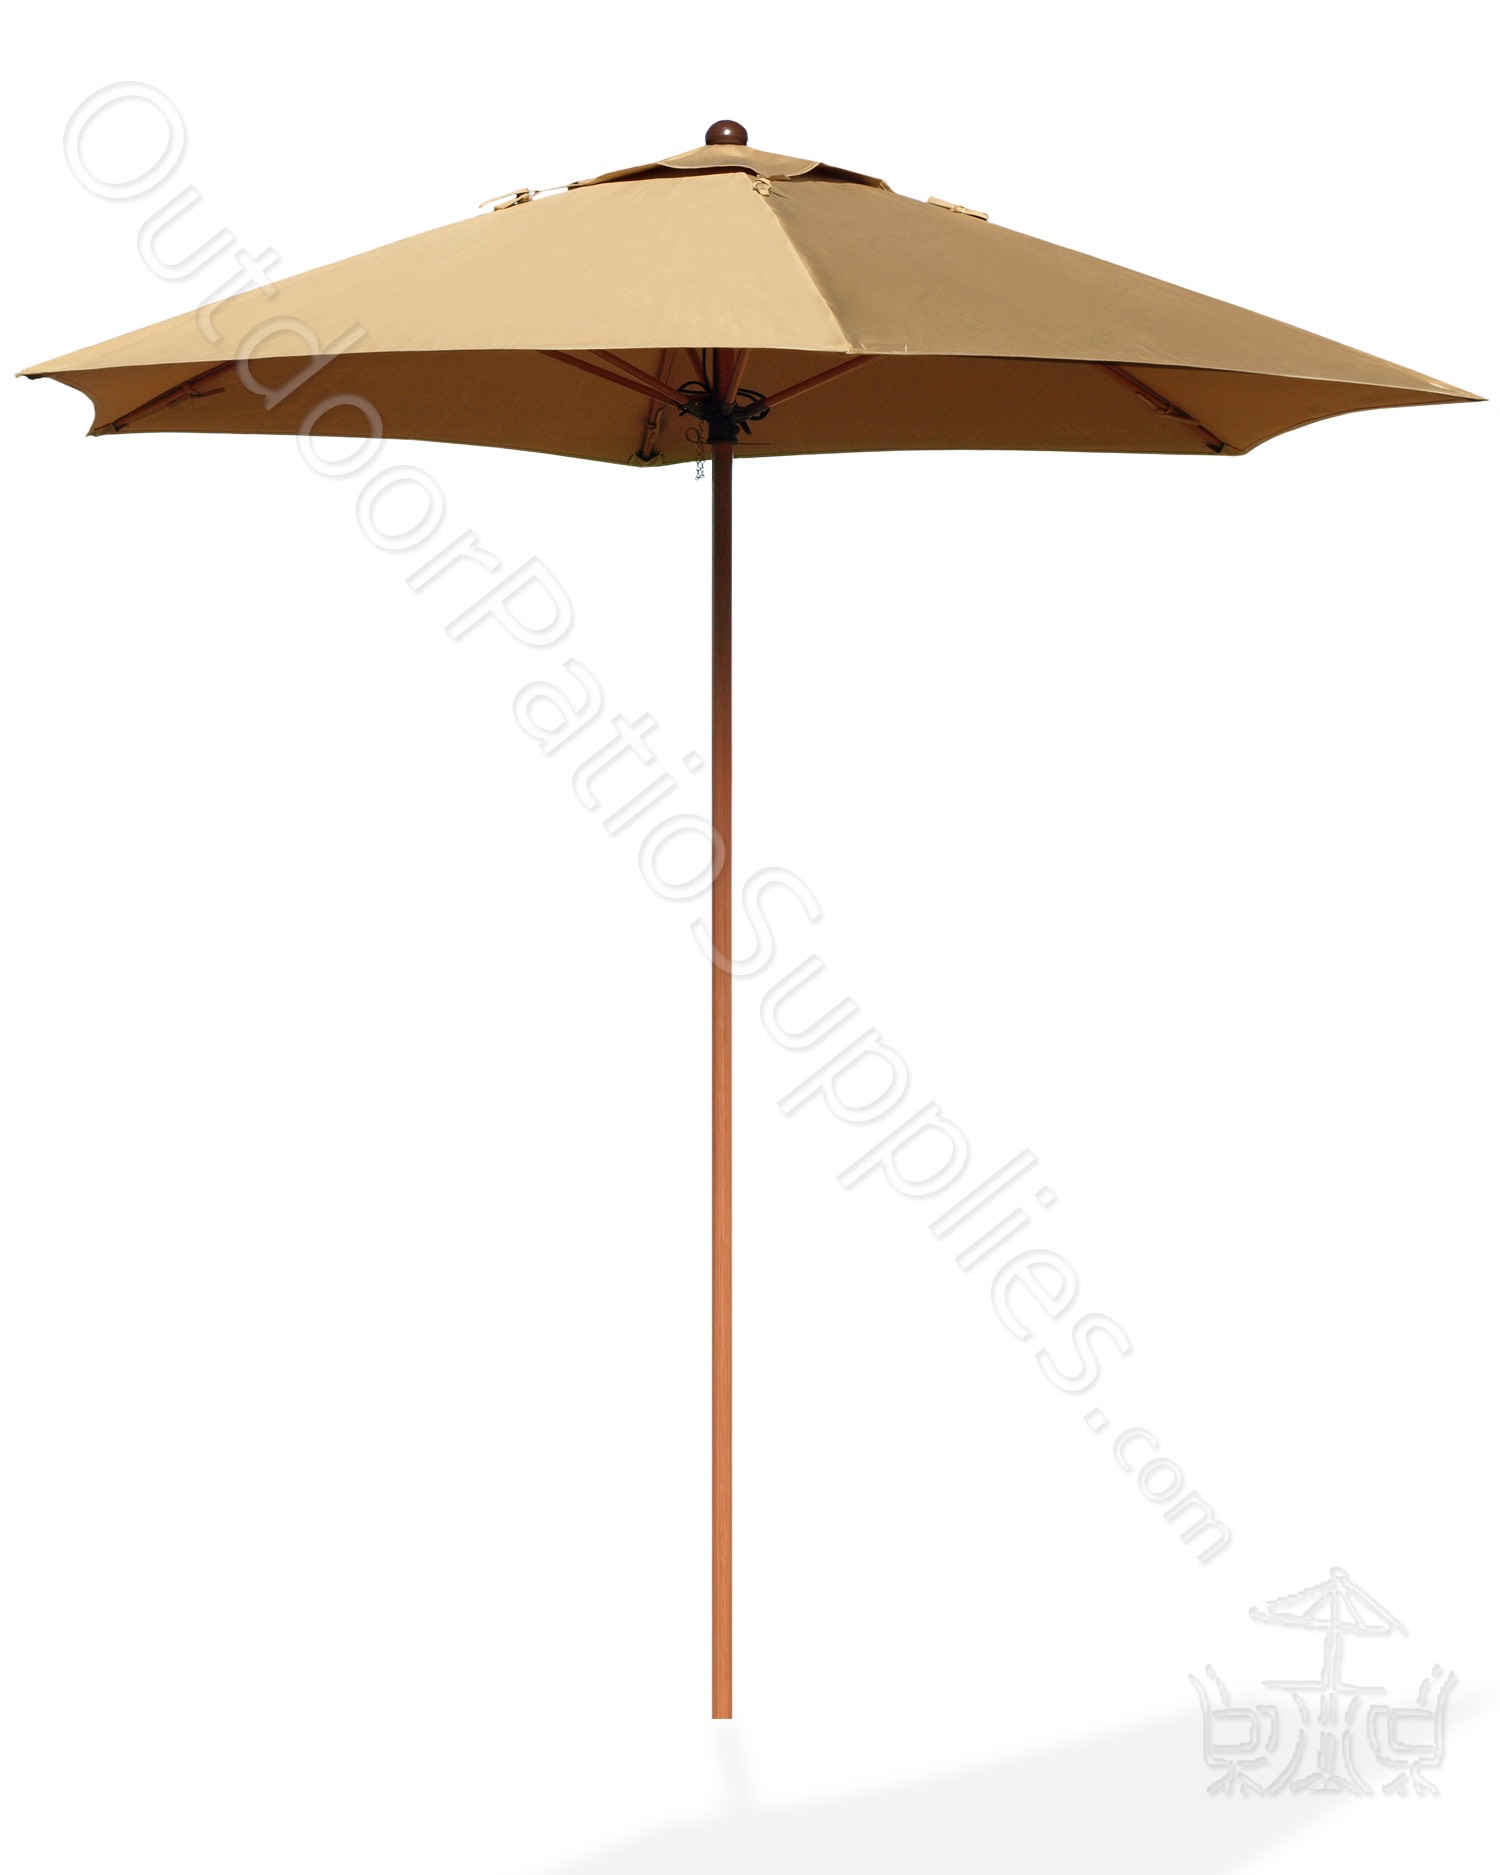 South Beach umbrella